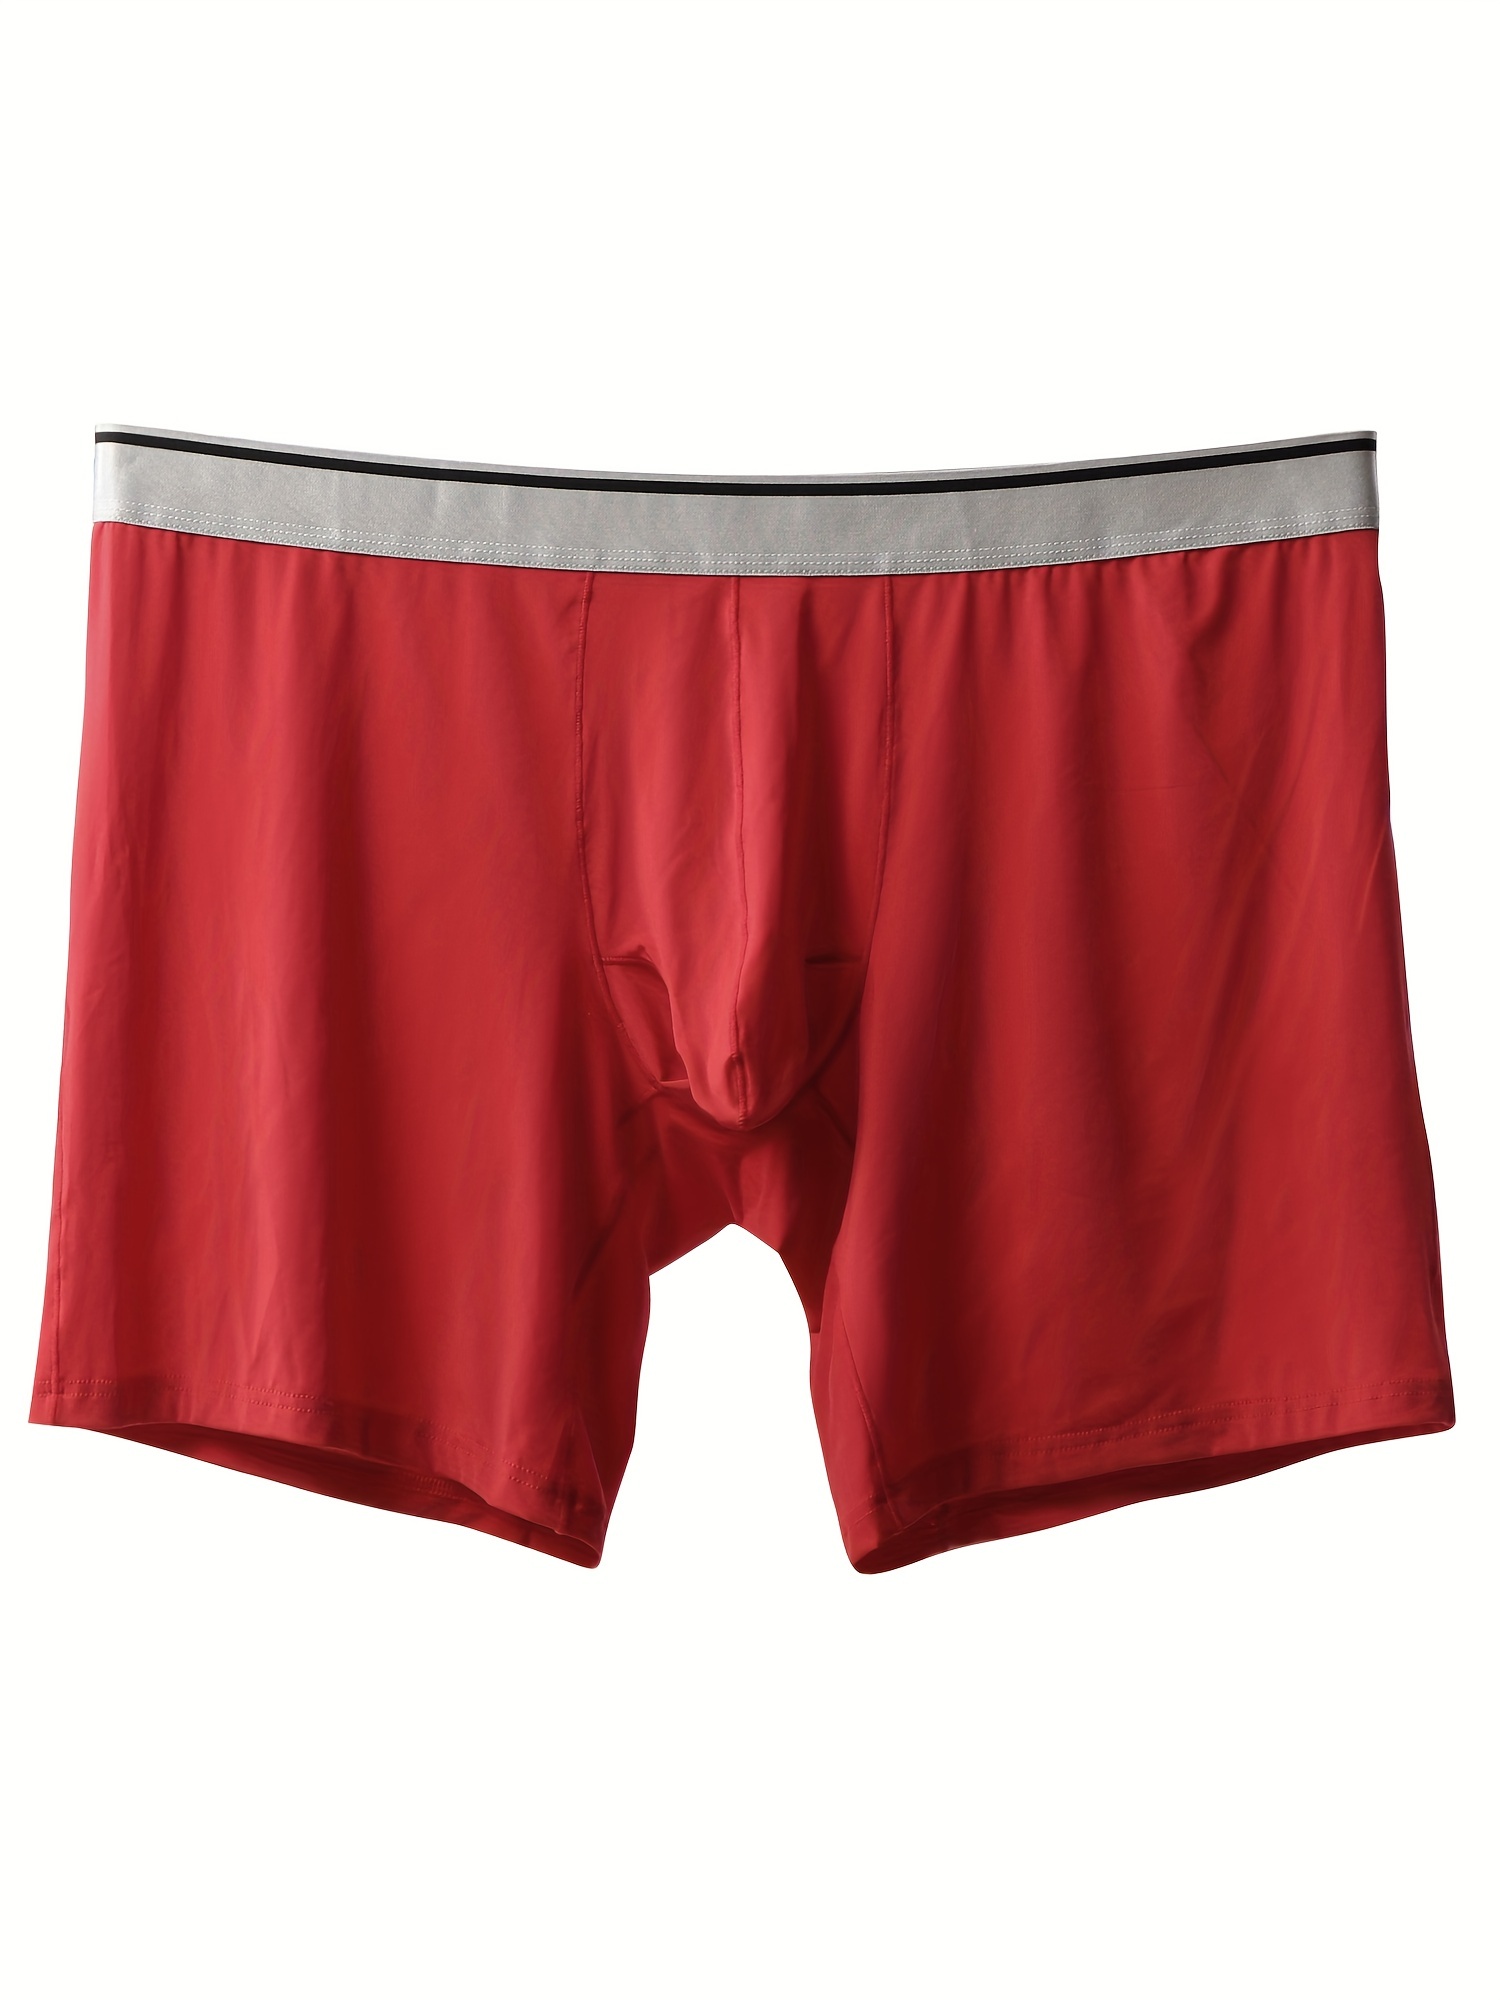 Underpants Elephant Underwear Minimalist Line Art Male Shorts Briefs Funny  Trunk High Quality Customs Oversize